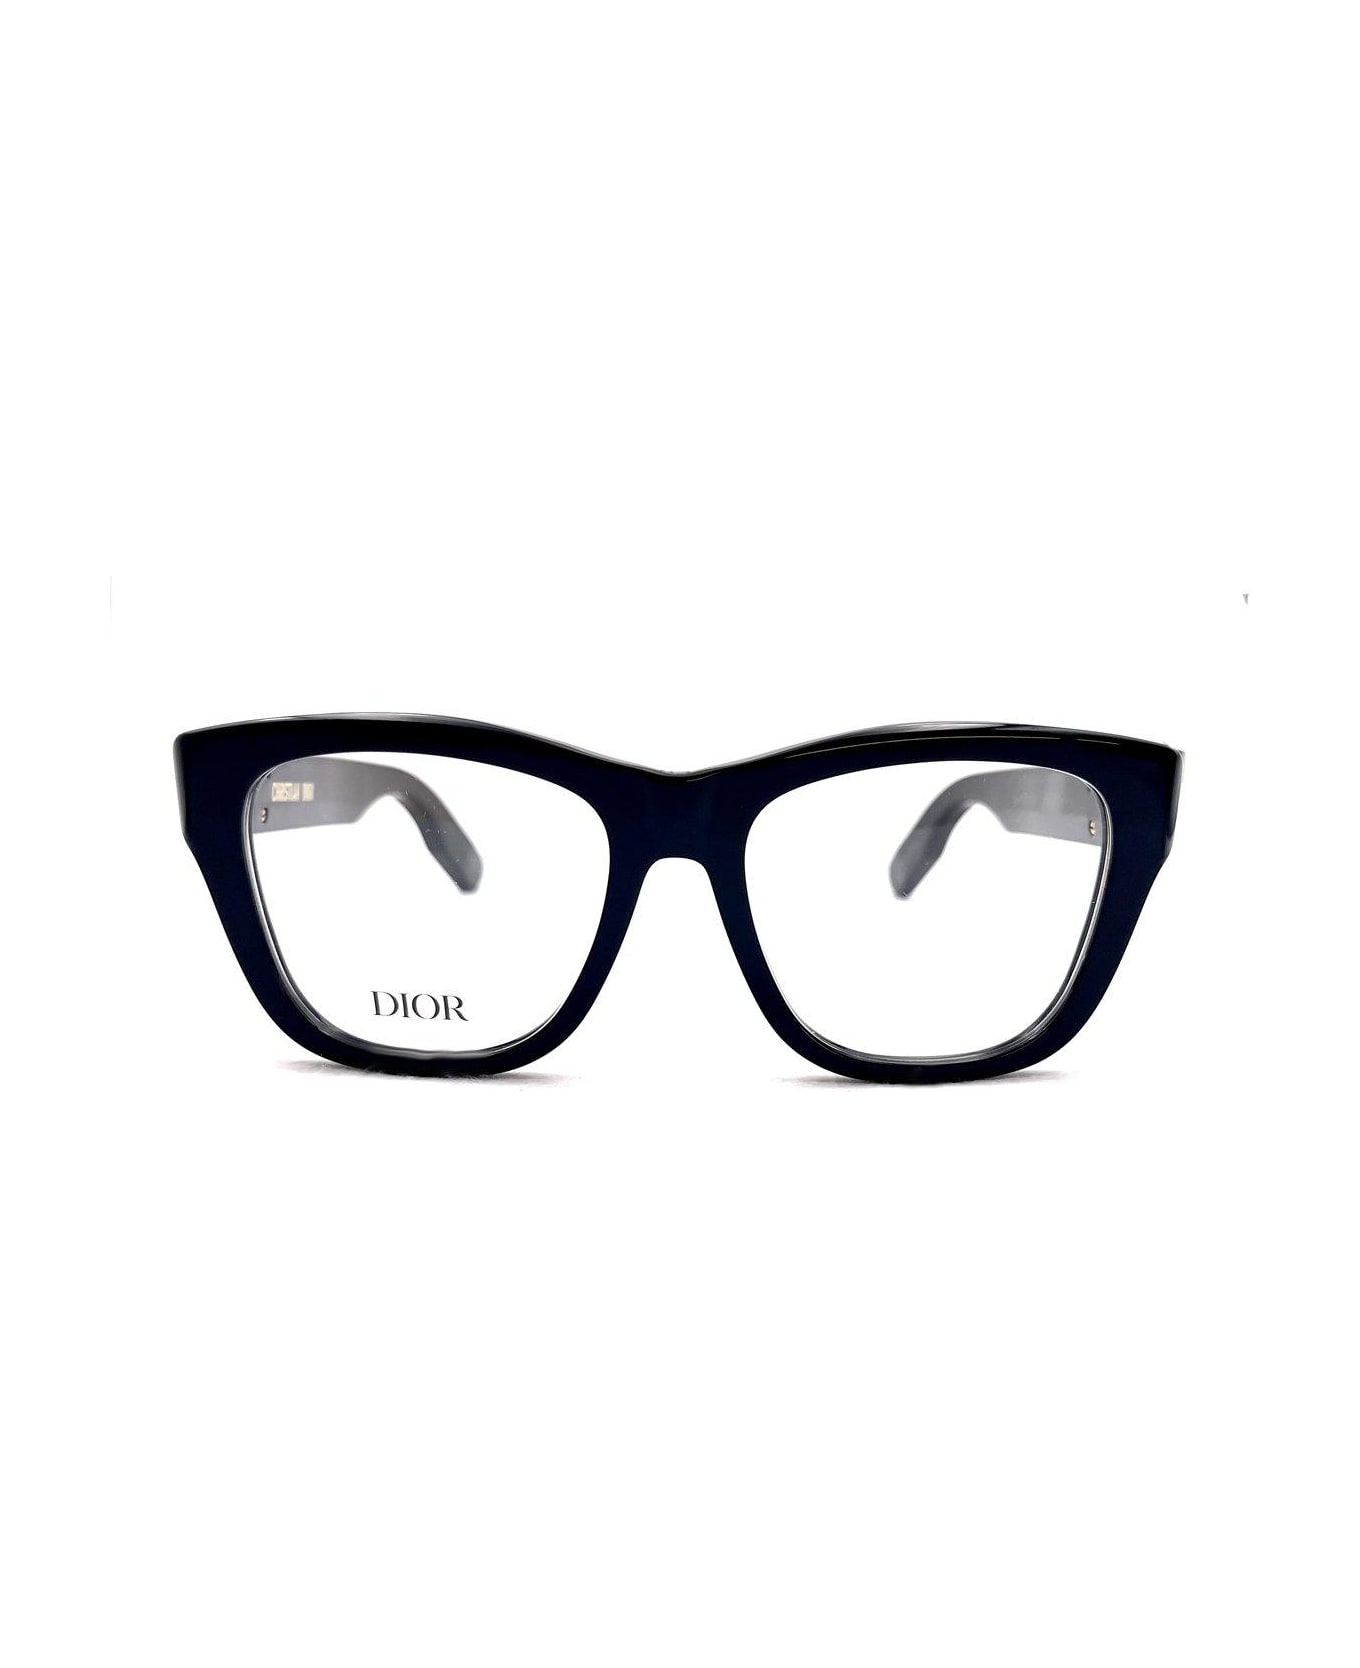 Dior Eyewear Square Frame Glasses - 1000